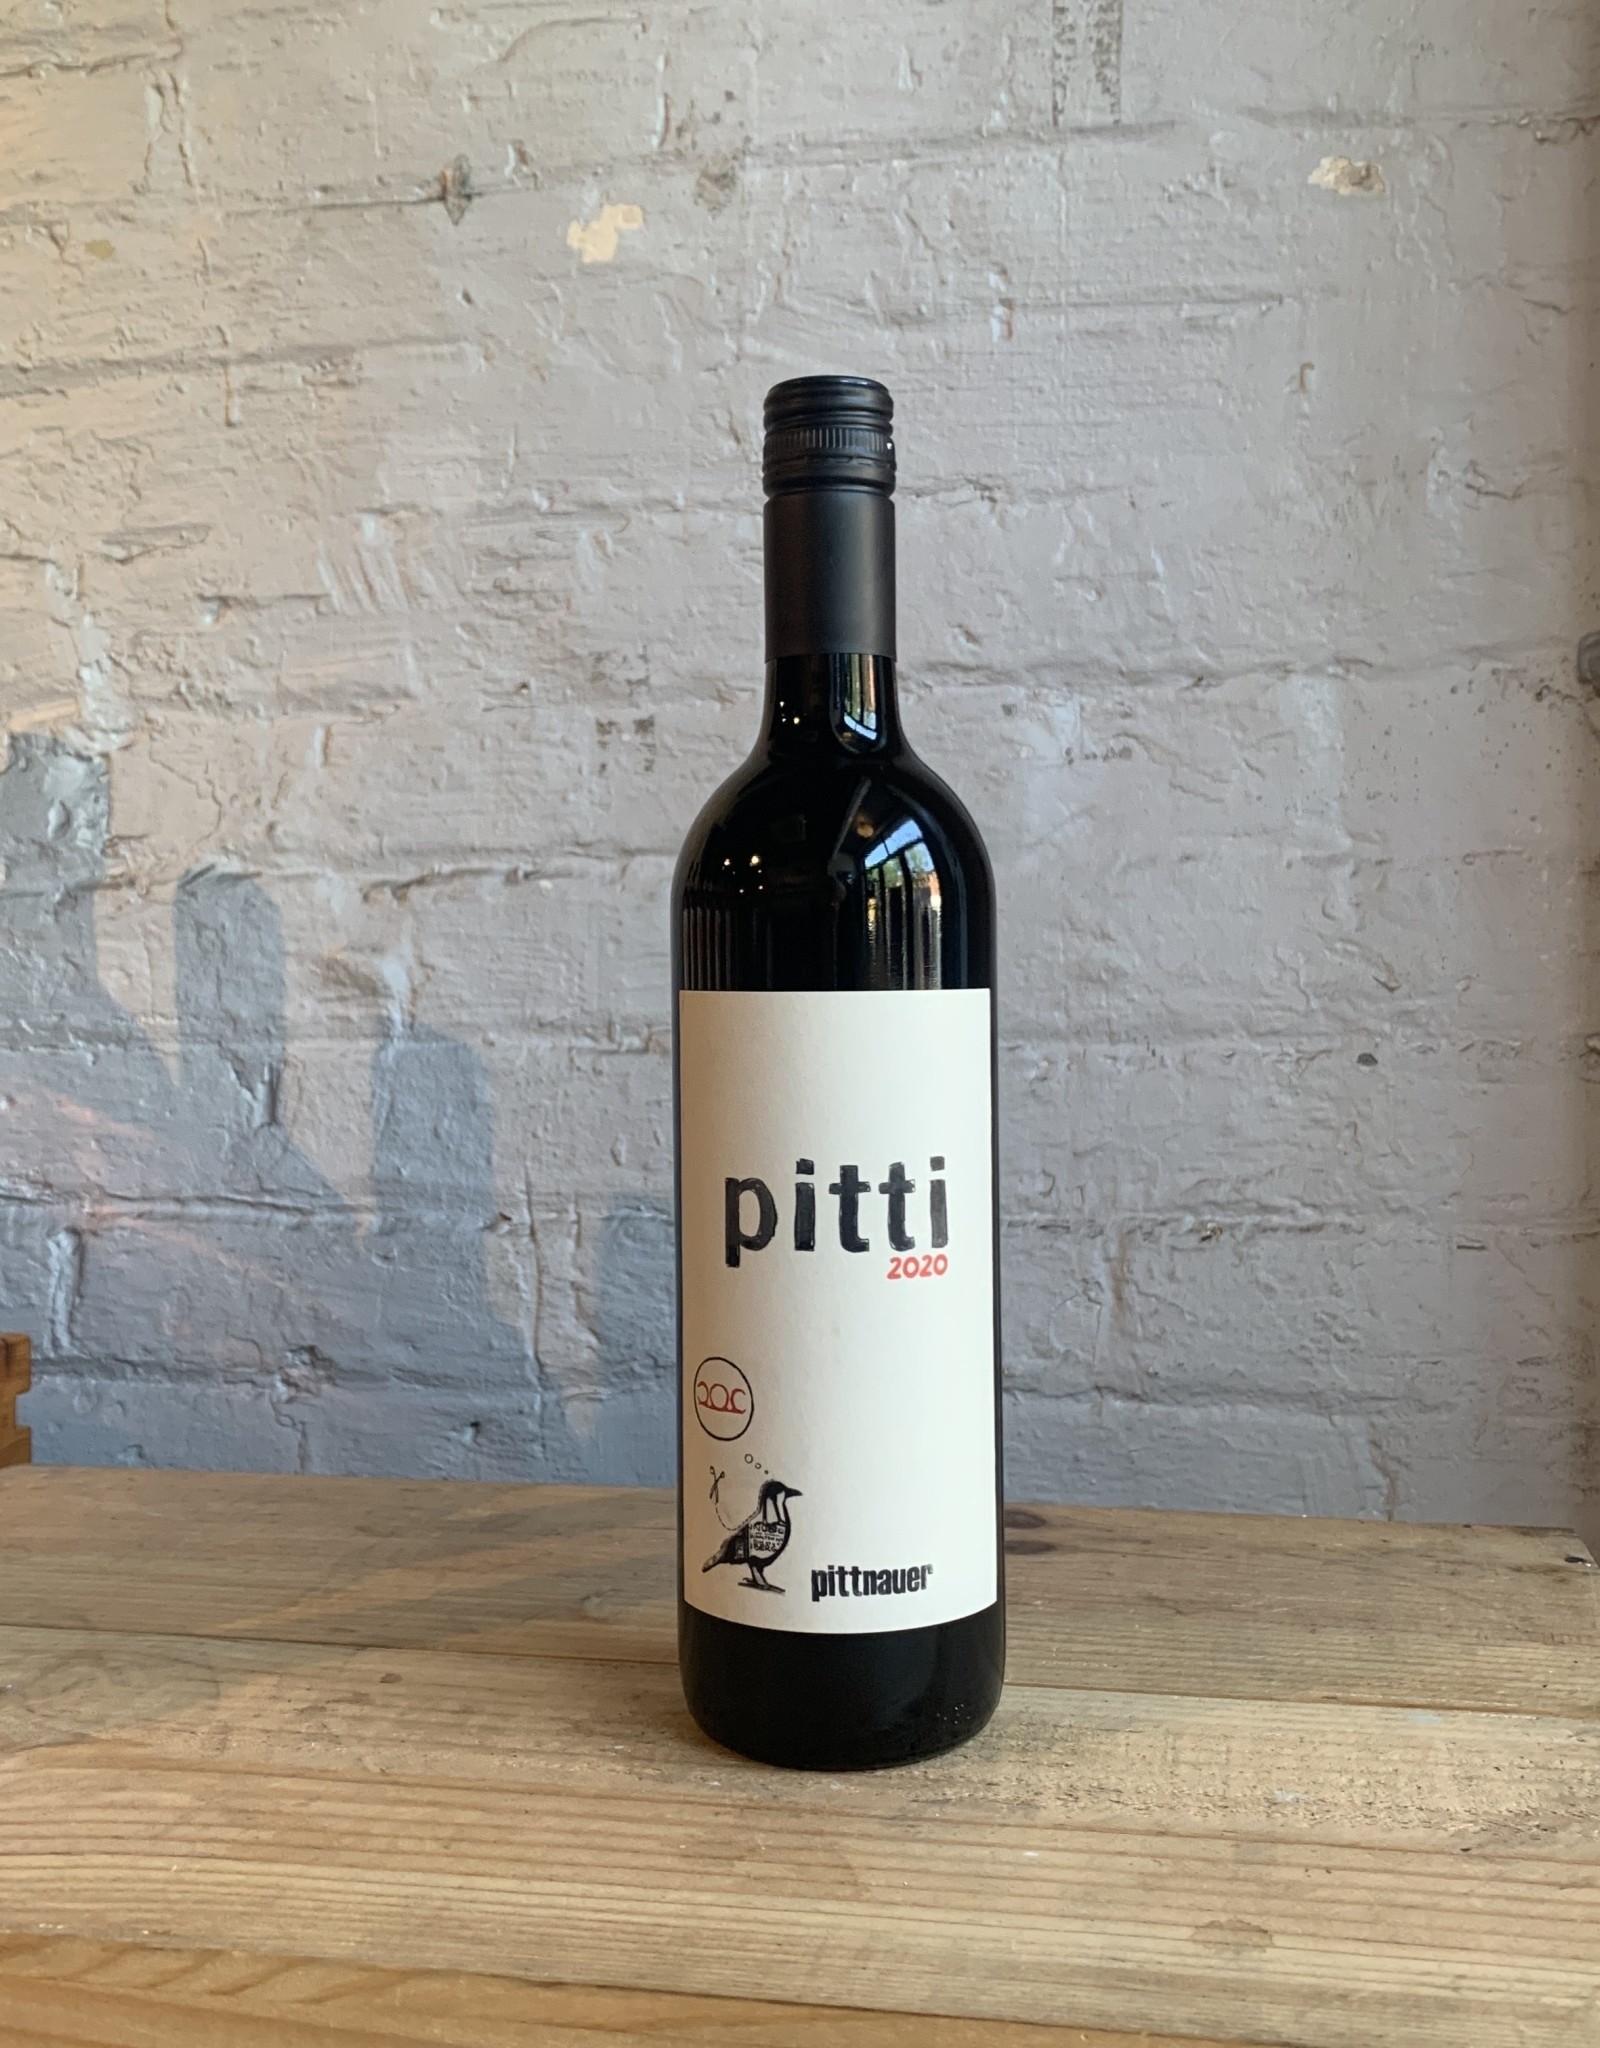 Wine 2020 Pittnauer 'Pitti' - Burgenland, Austria (750ml)